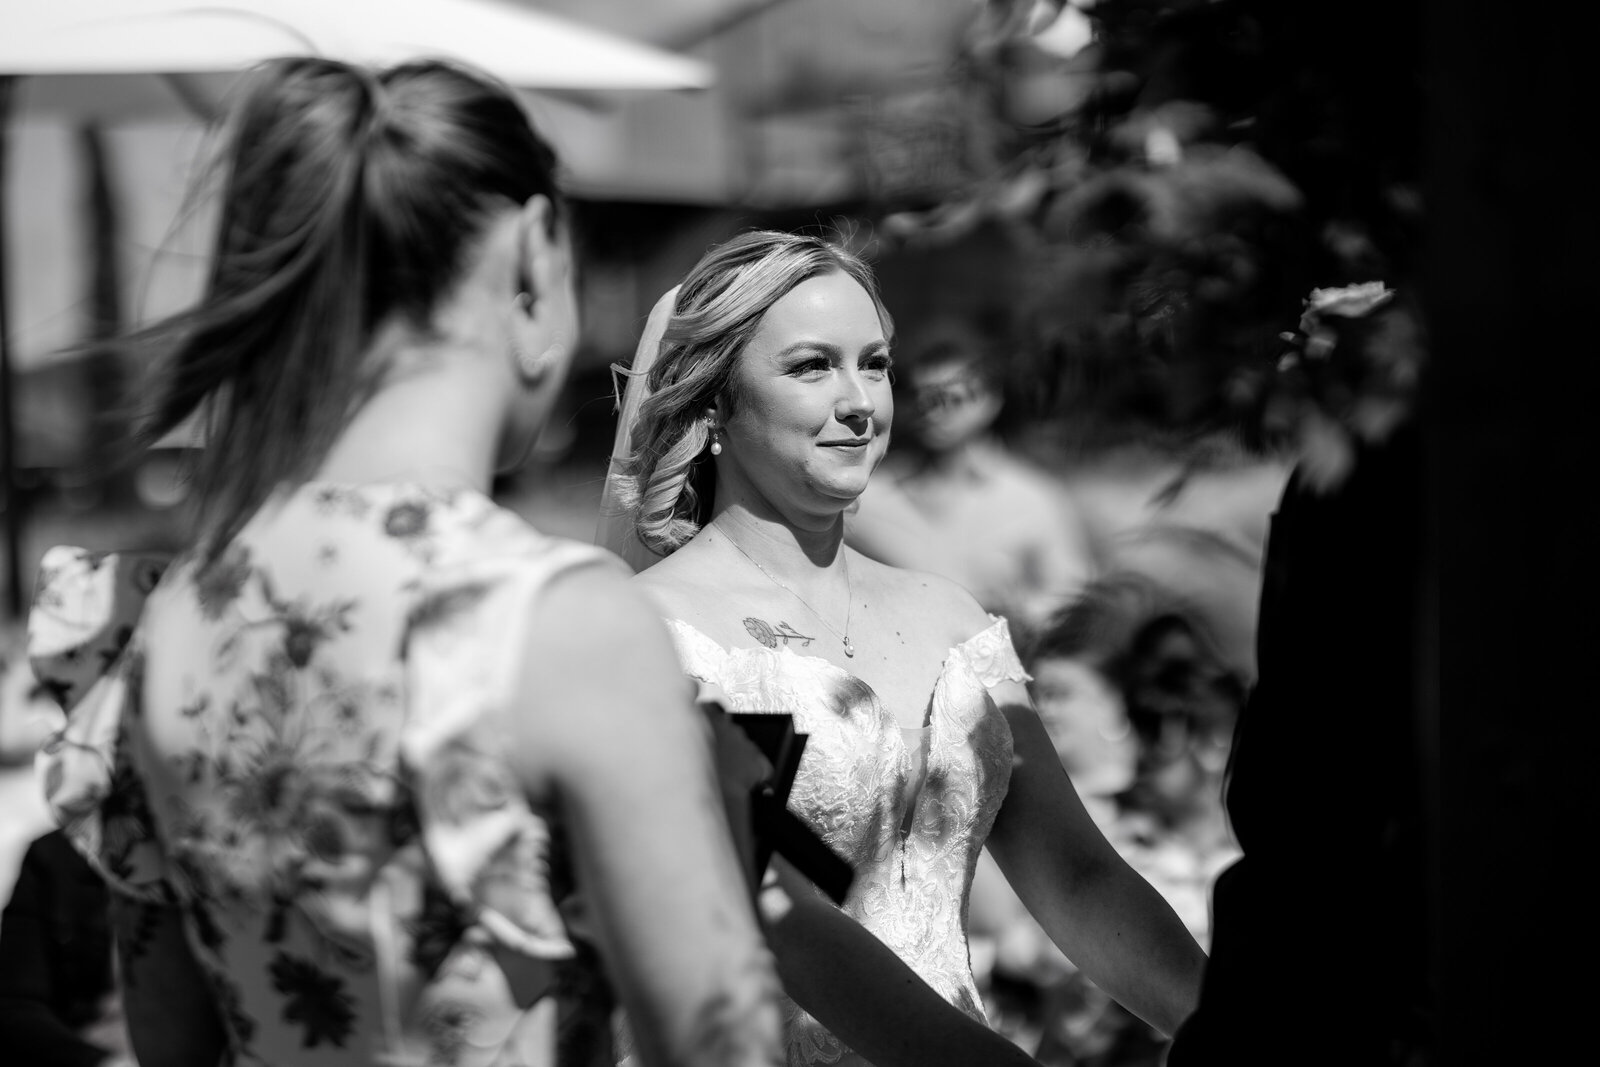 Maxine-Chris-Rexvil-Photography-Adelaide-Wedding-Photographer-296